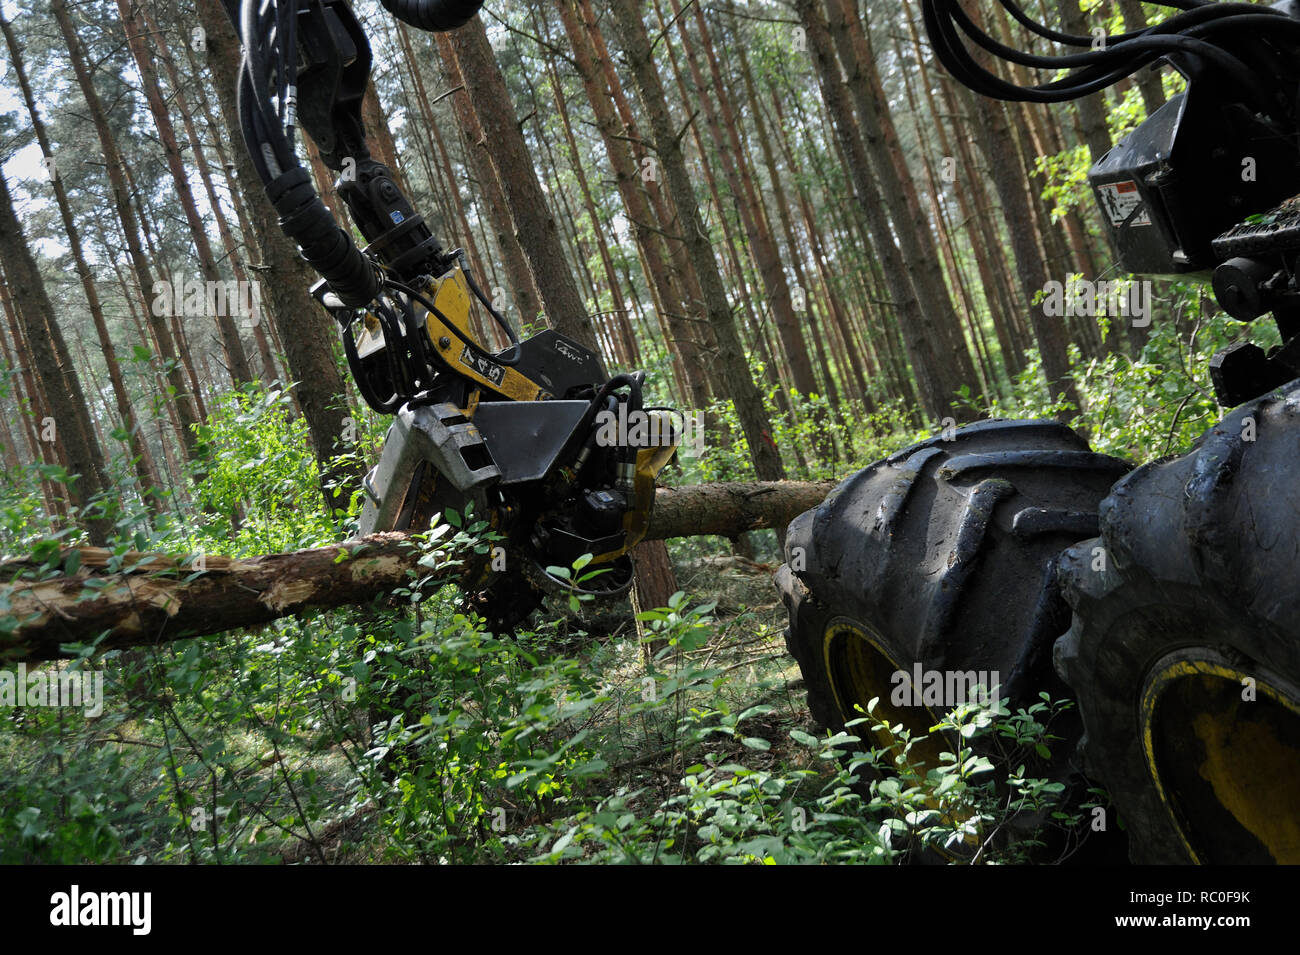 Holzerntemaschine, Harvester, zerlegt Bäume und fällt in einem Arbeitsgang | harvesterr à couper des arbres dans le bois Banque D'Images